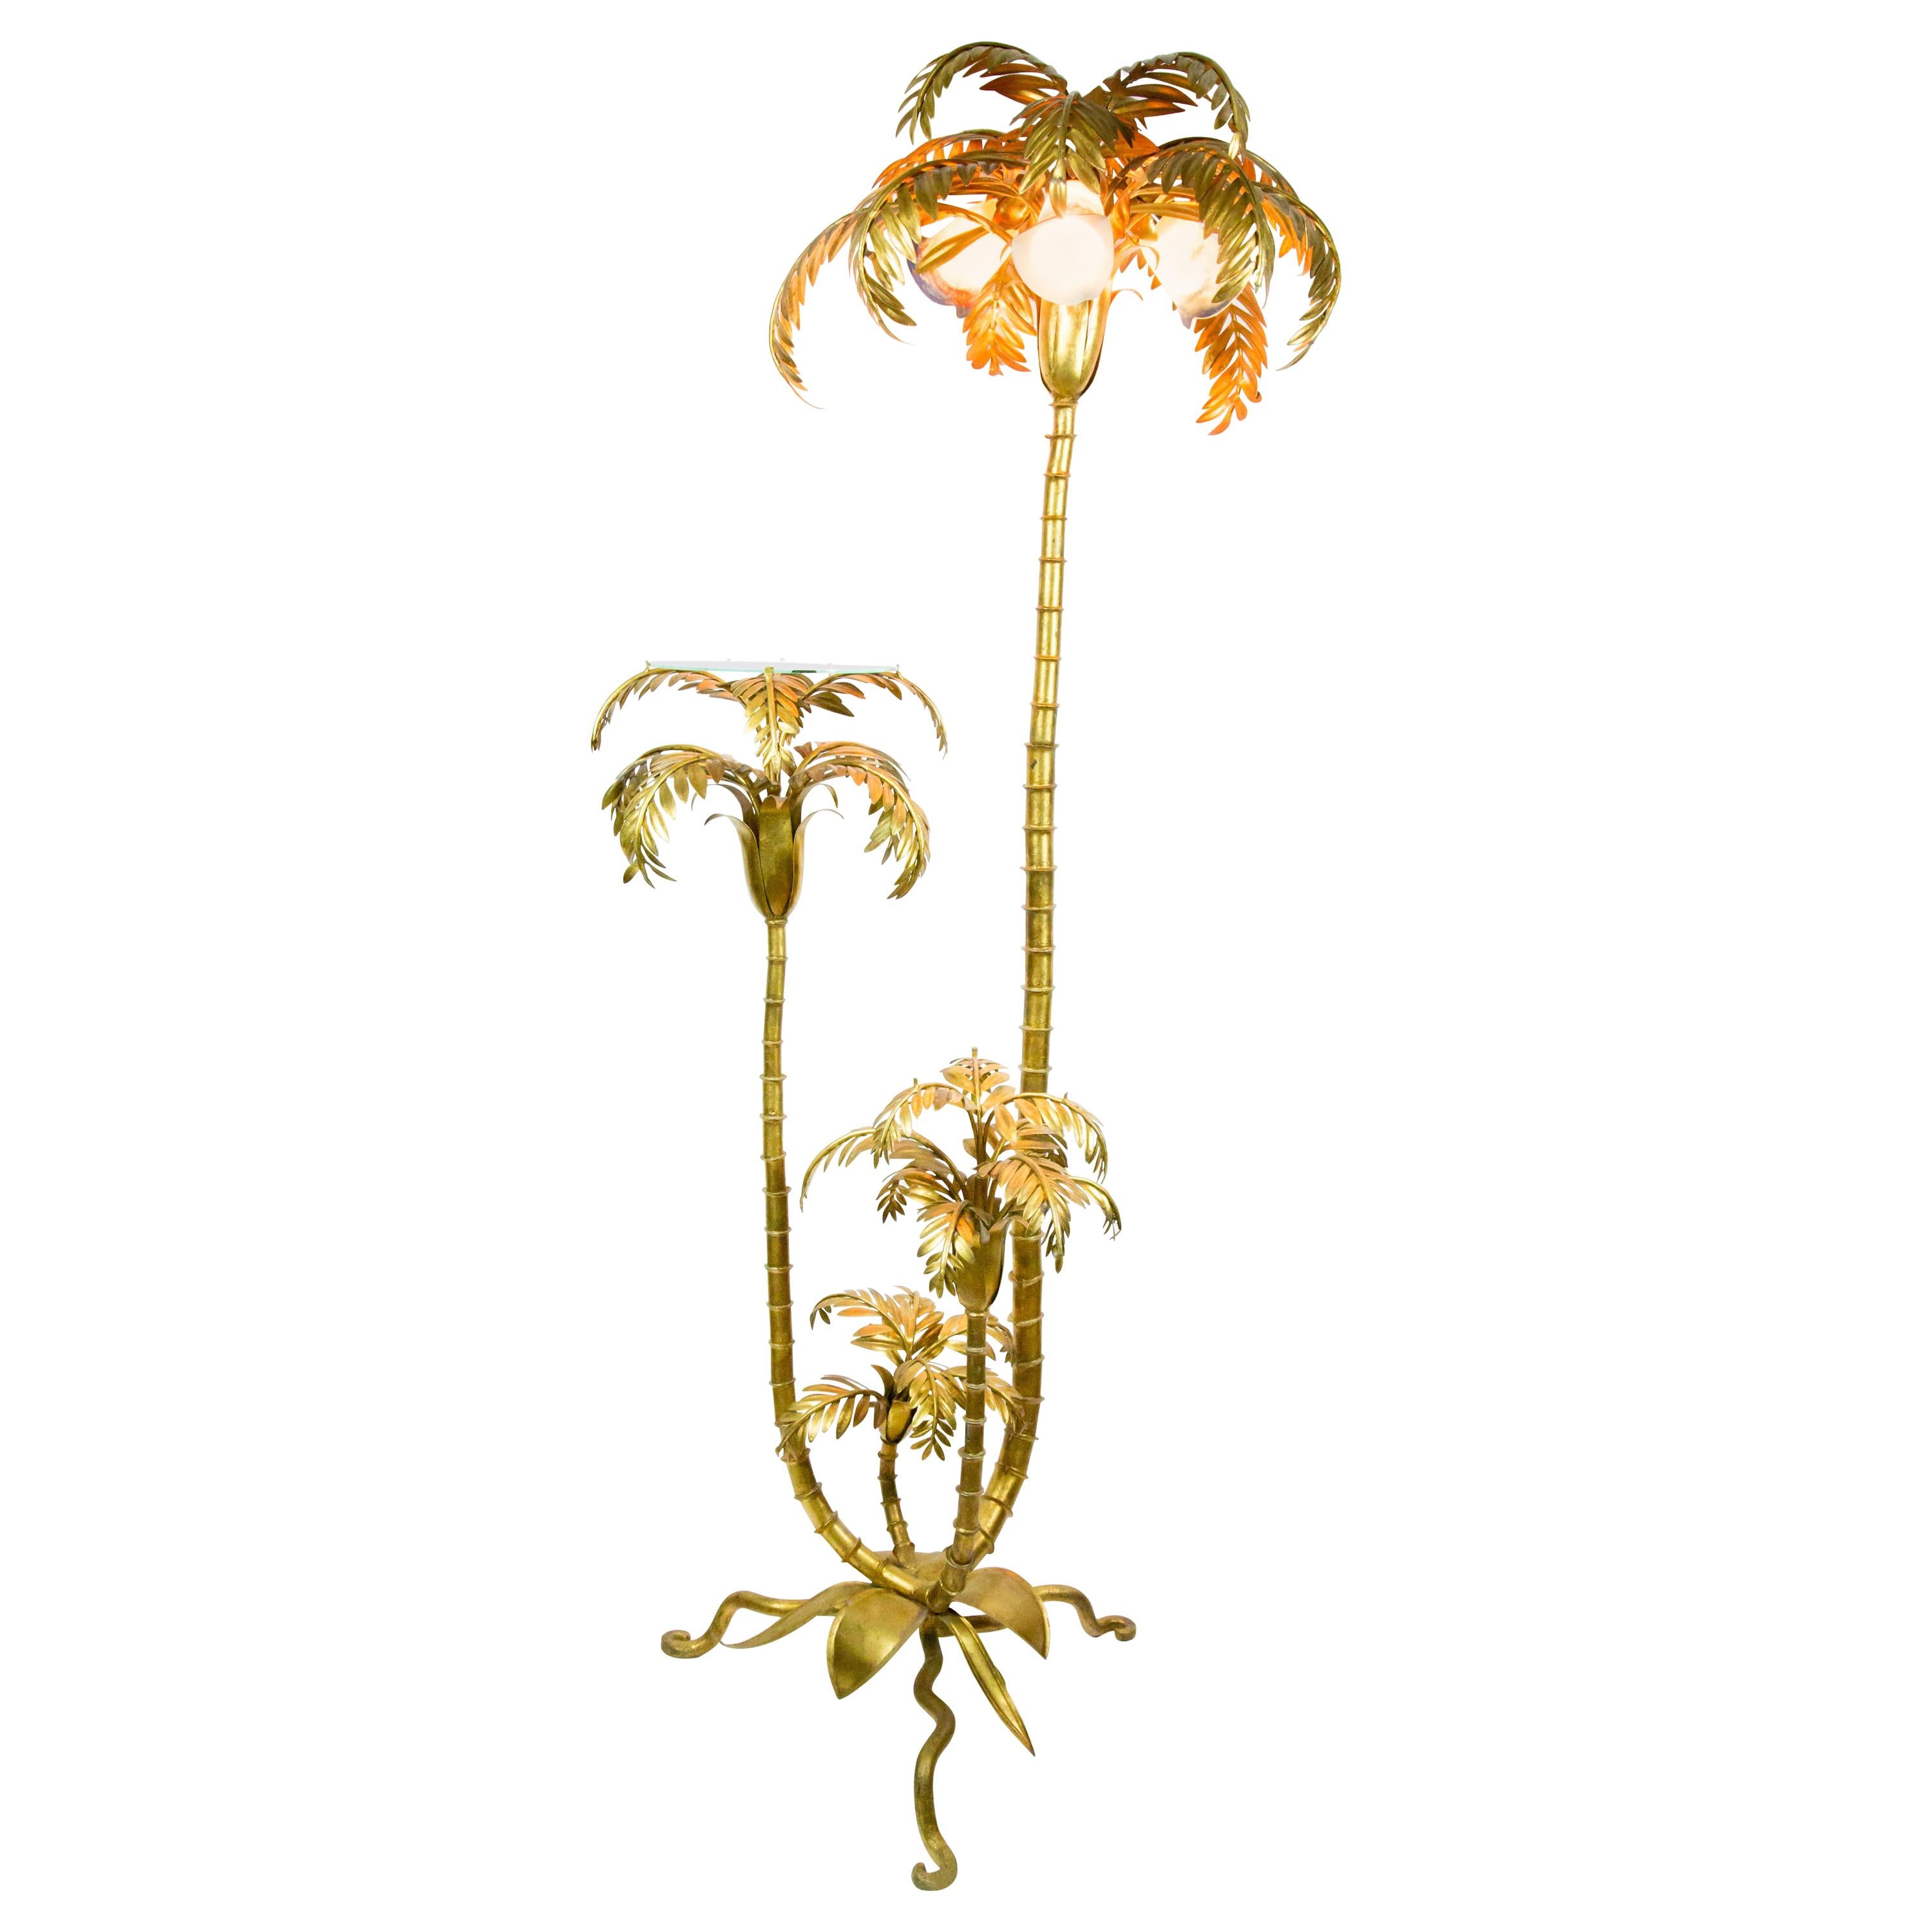 Gold Palm Tree Lamp with coloured Glass Shades & Shelf, 1950s, Italian Regency